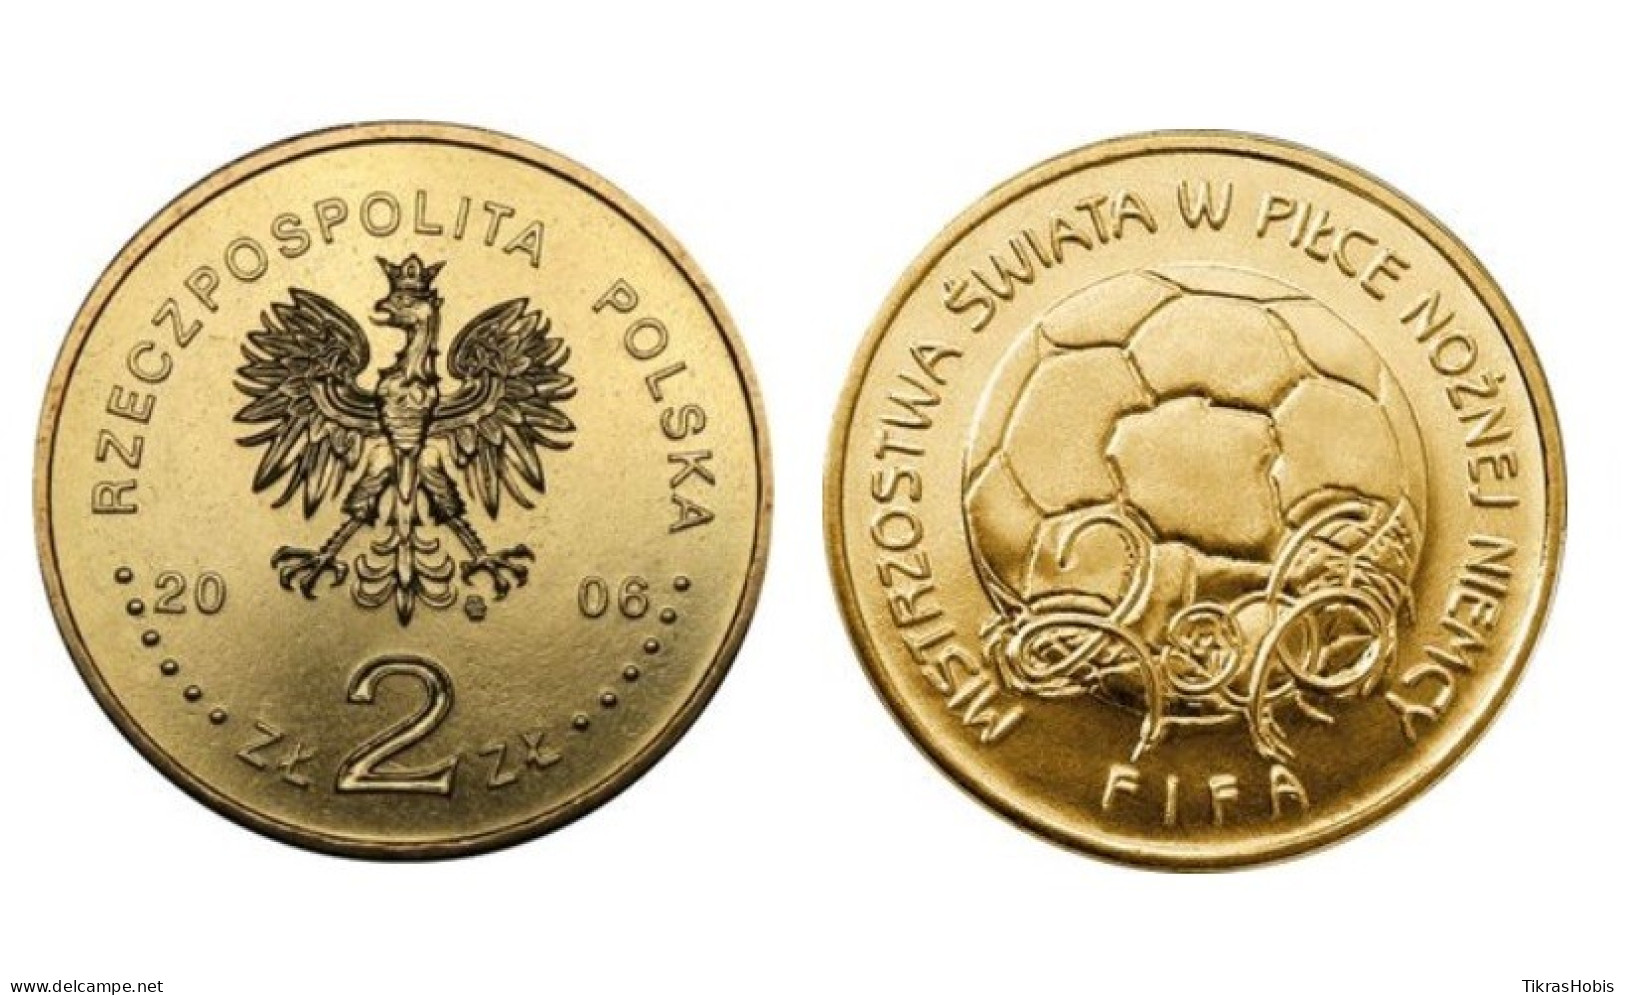 Poland 2 Zloty 2006 FIFA World Cup Y606 - Poland